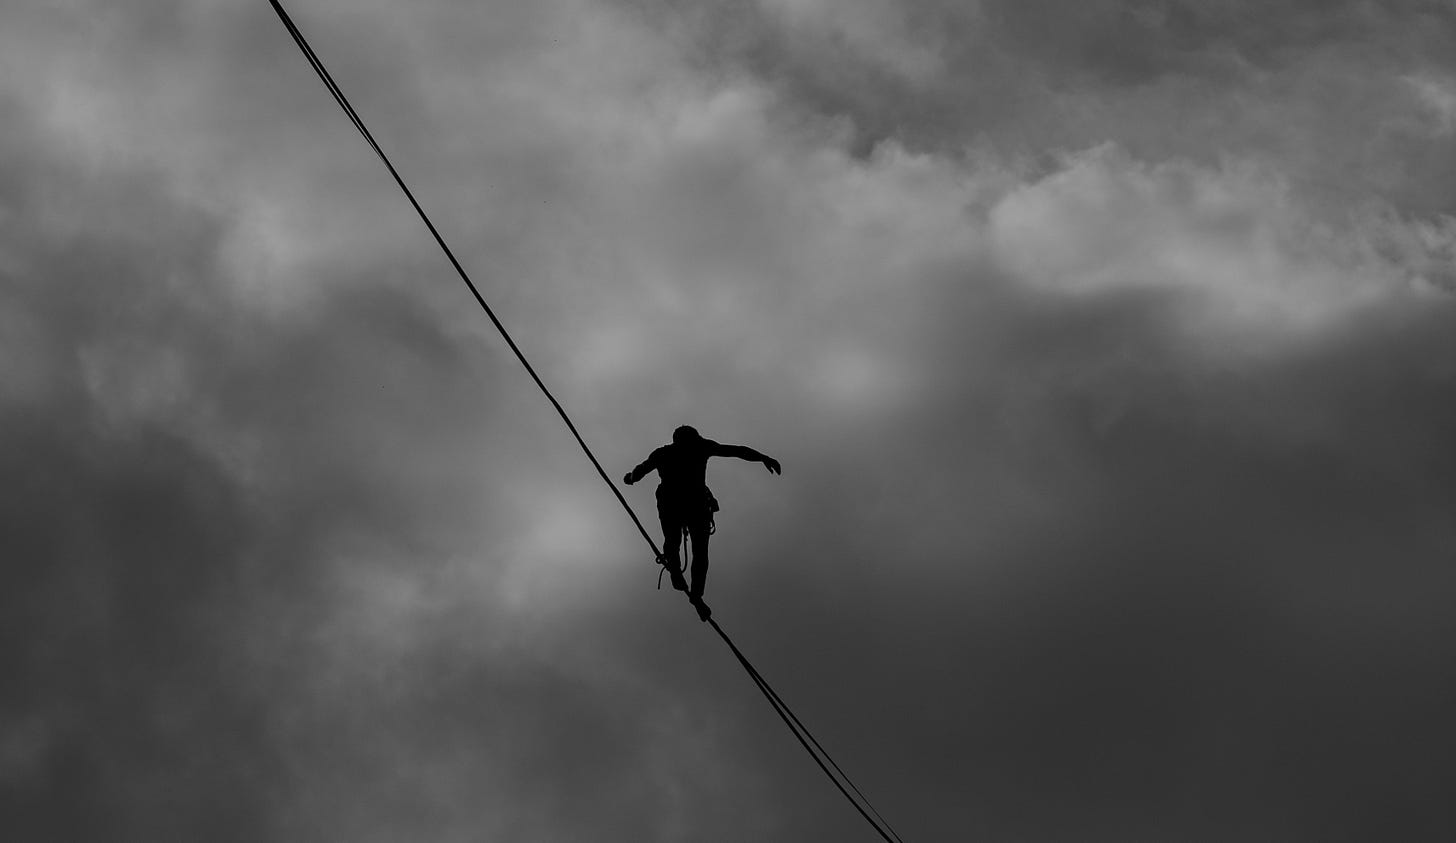 A tightrope walker